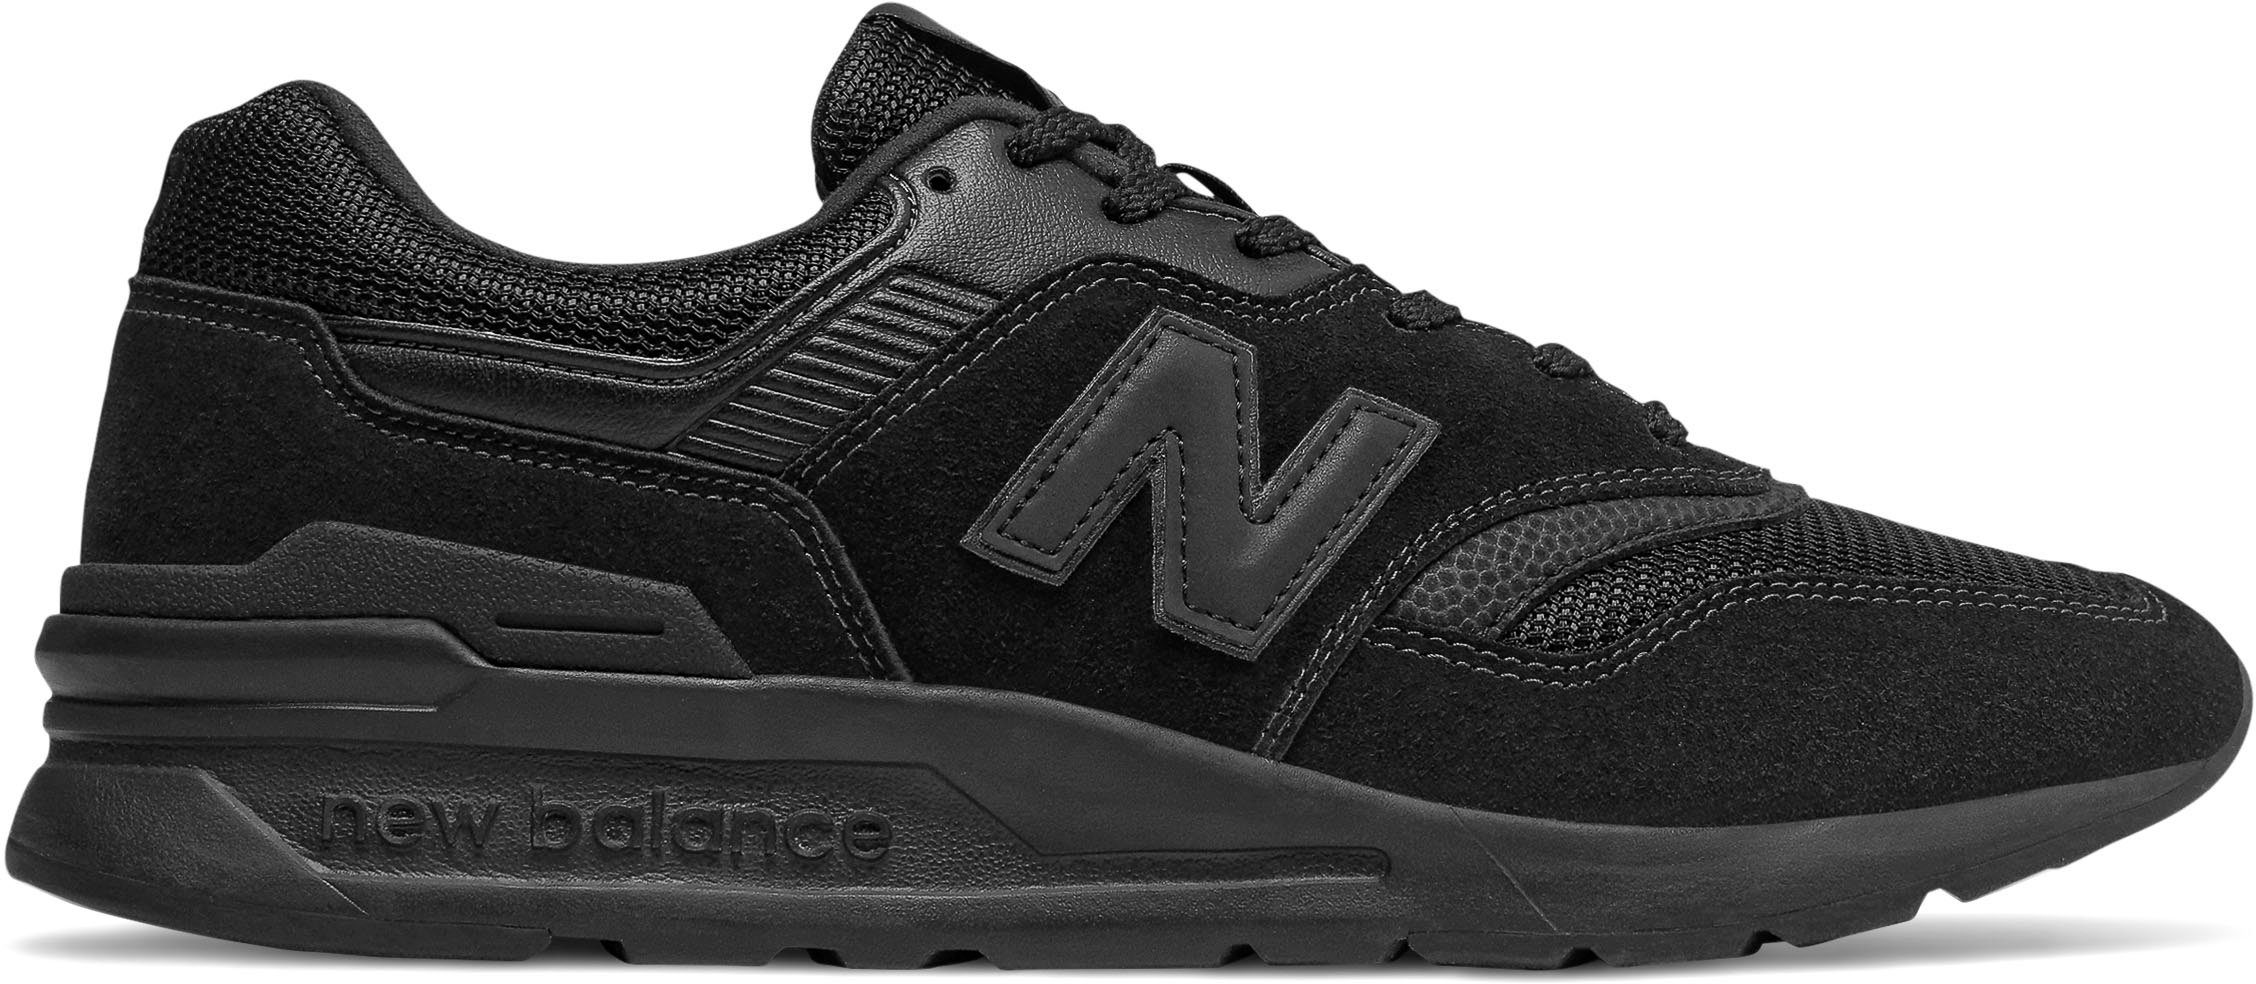 New Balance CM997 "Classic" Sneaker